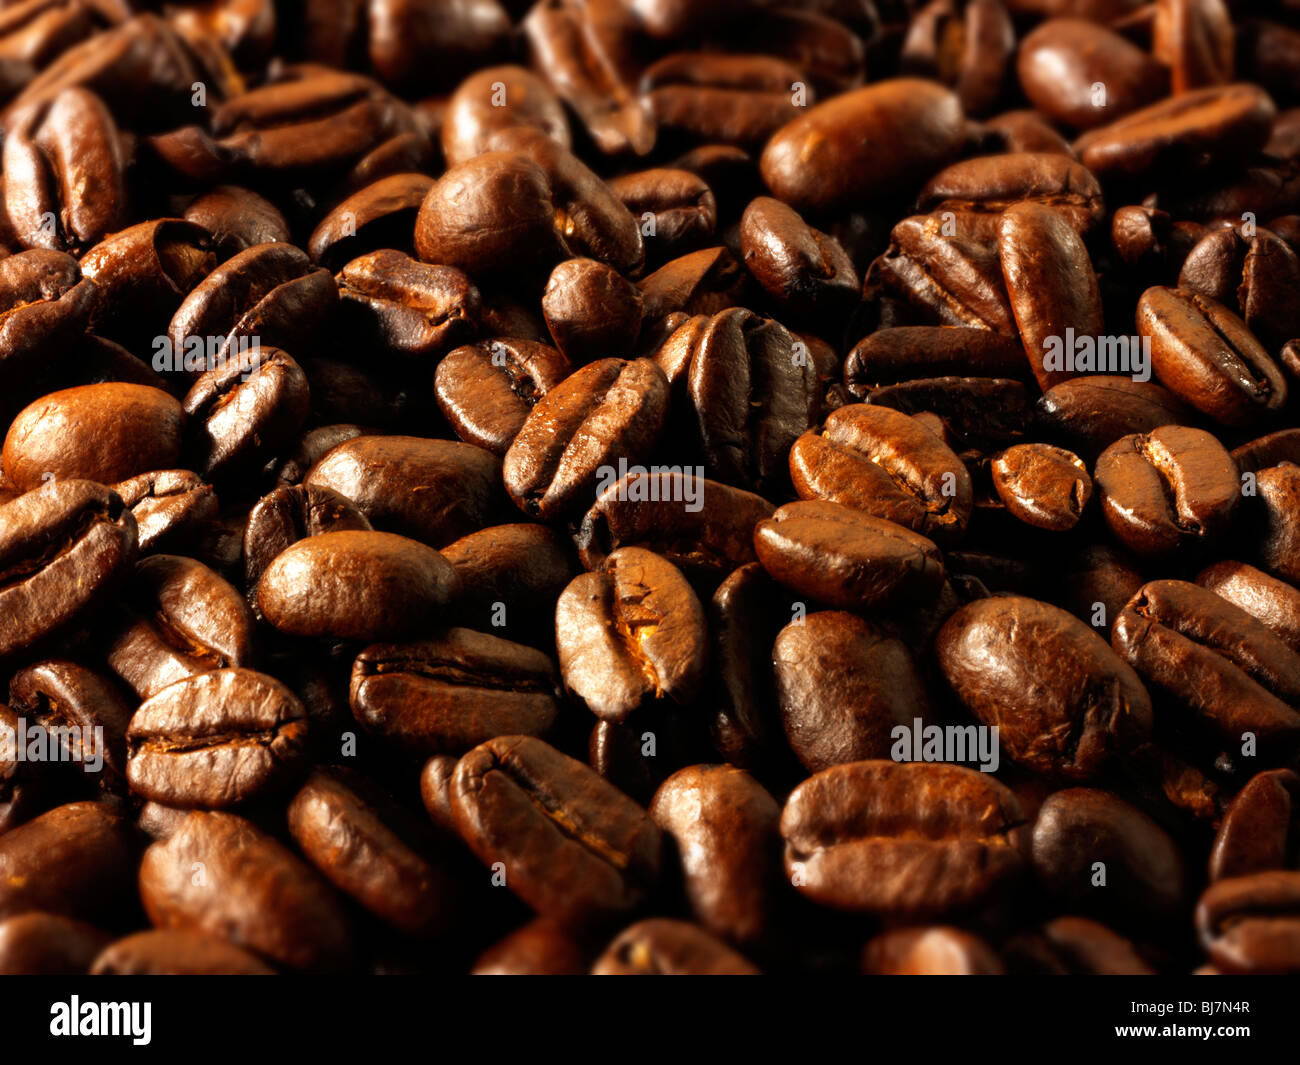 Papua New Guinea fair trade coffee beans stock Photos Stock Photo